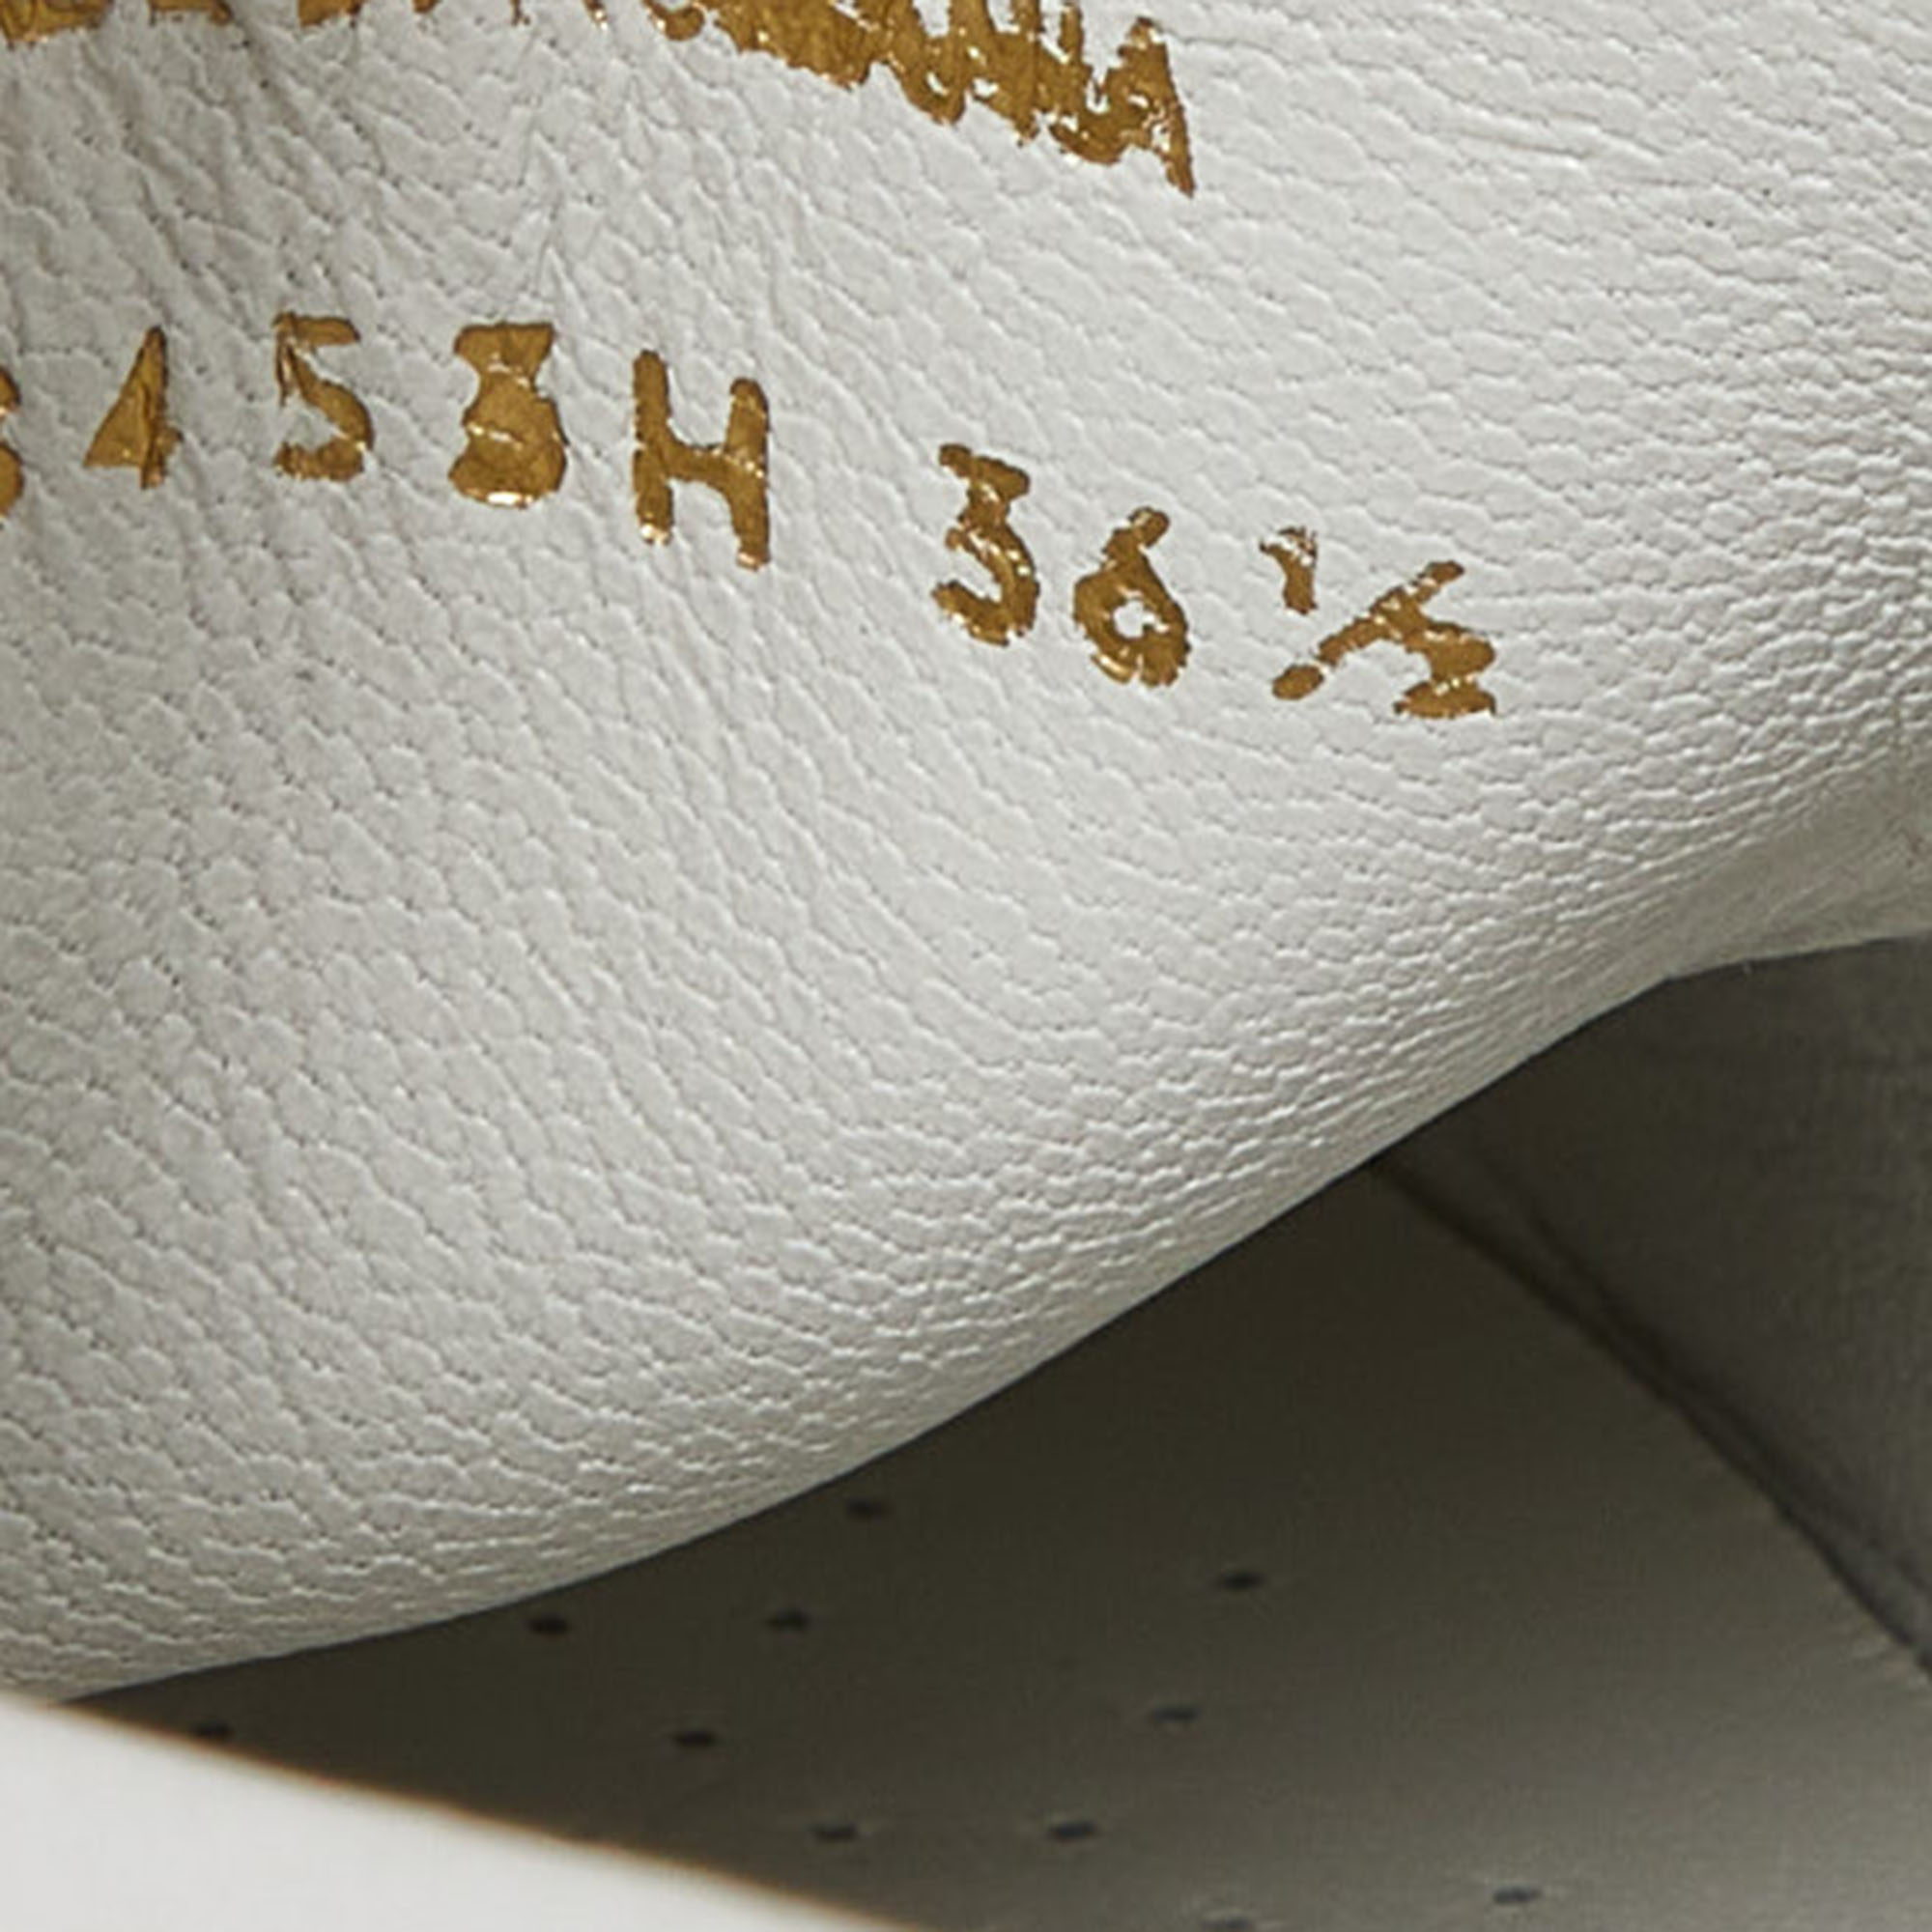 Prada White Leather Heart Slip On Sneakers Size 36.5